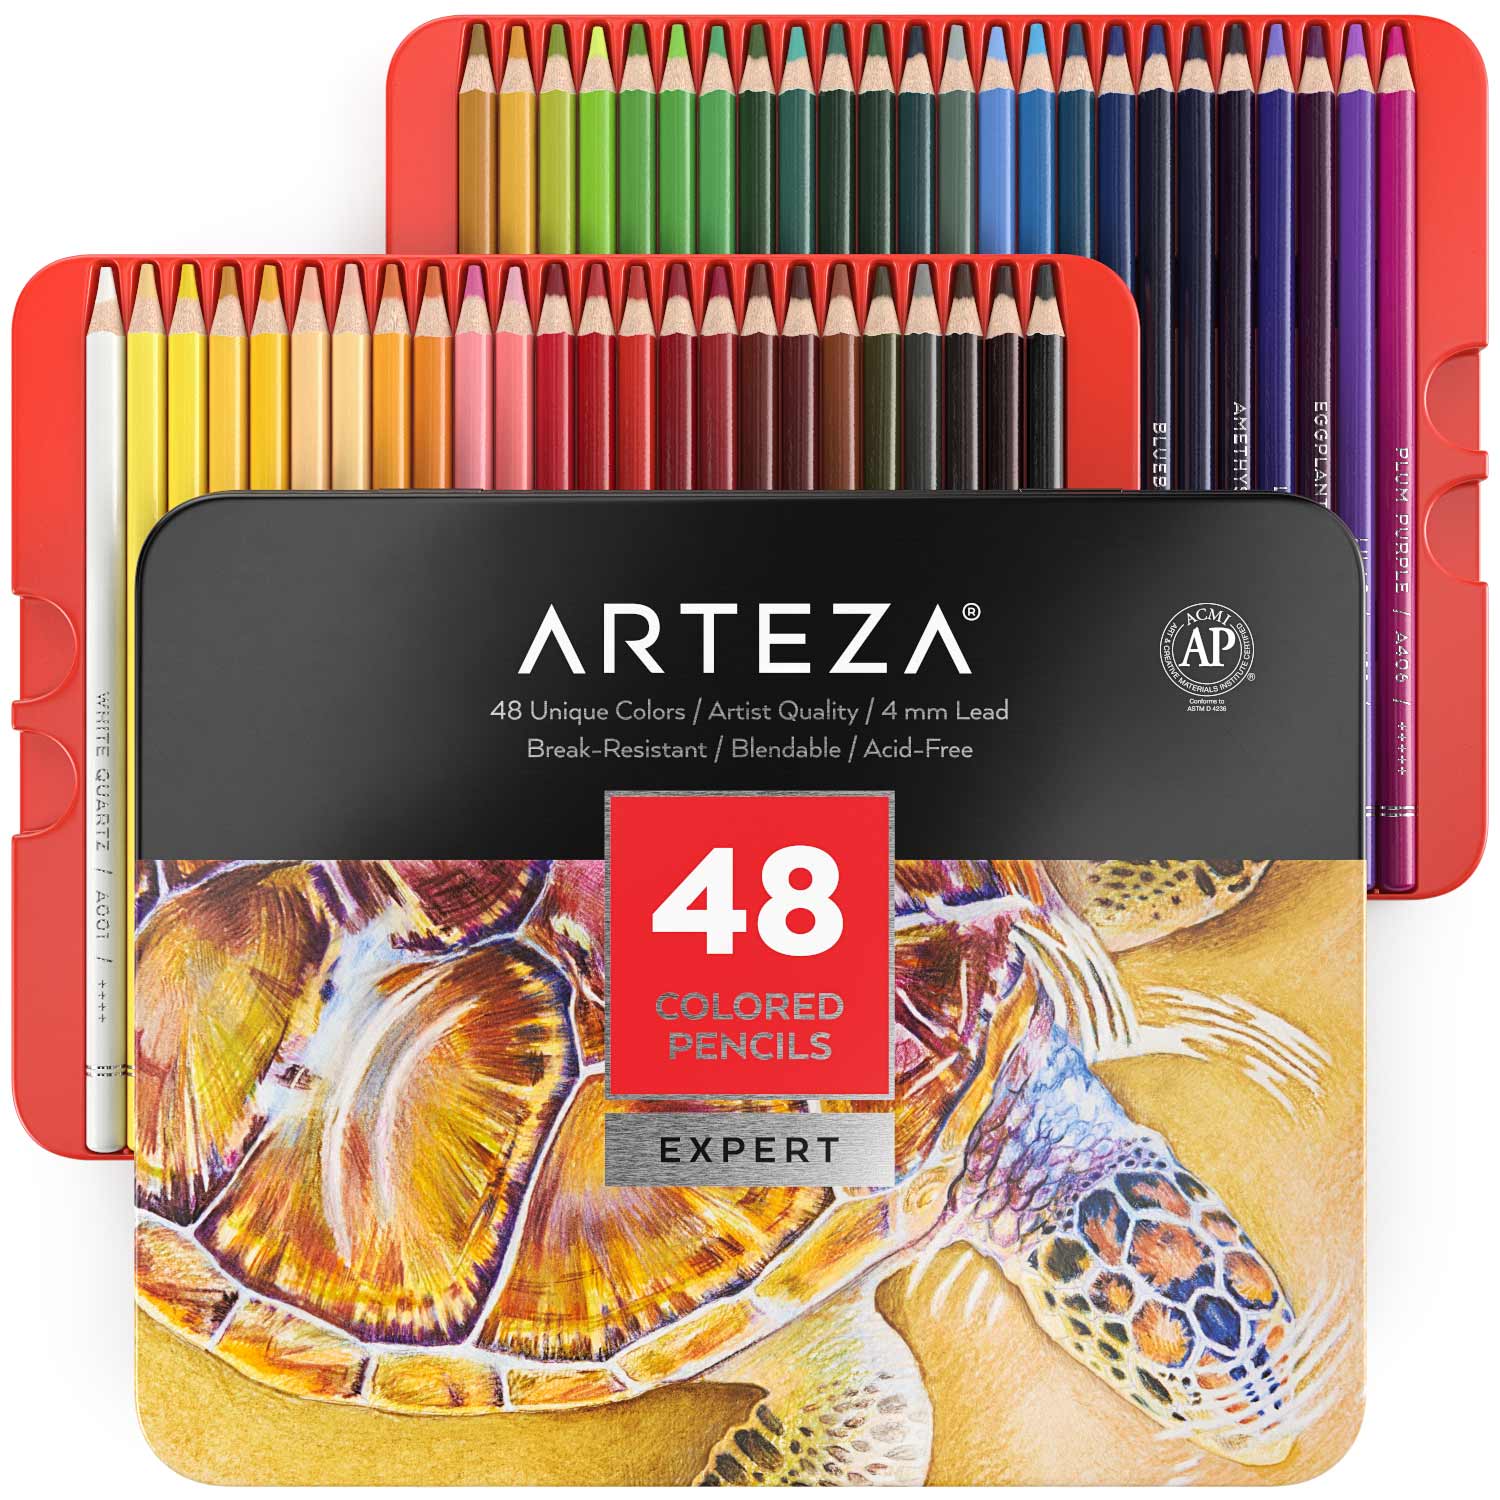 Professional Colored Pencils Set Of 48 Arteza Sold and shipped by arteza. professional colored pencils set of 48